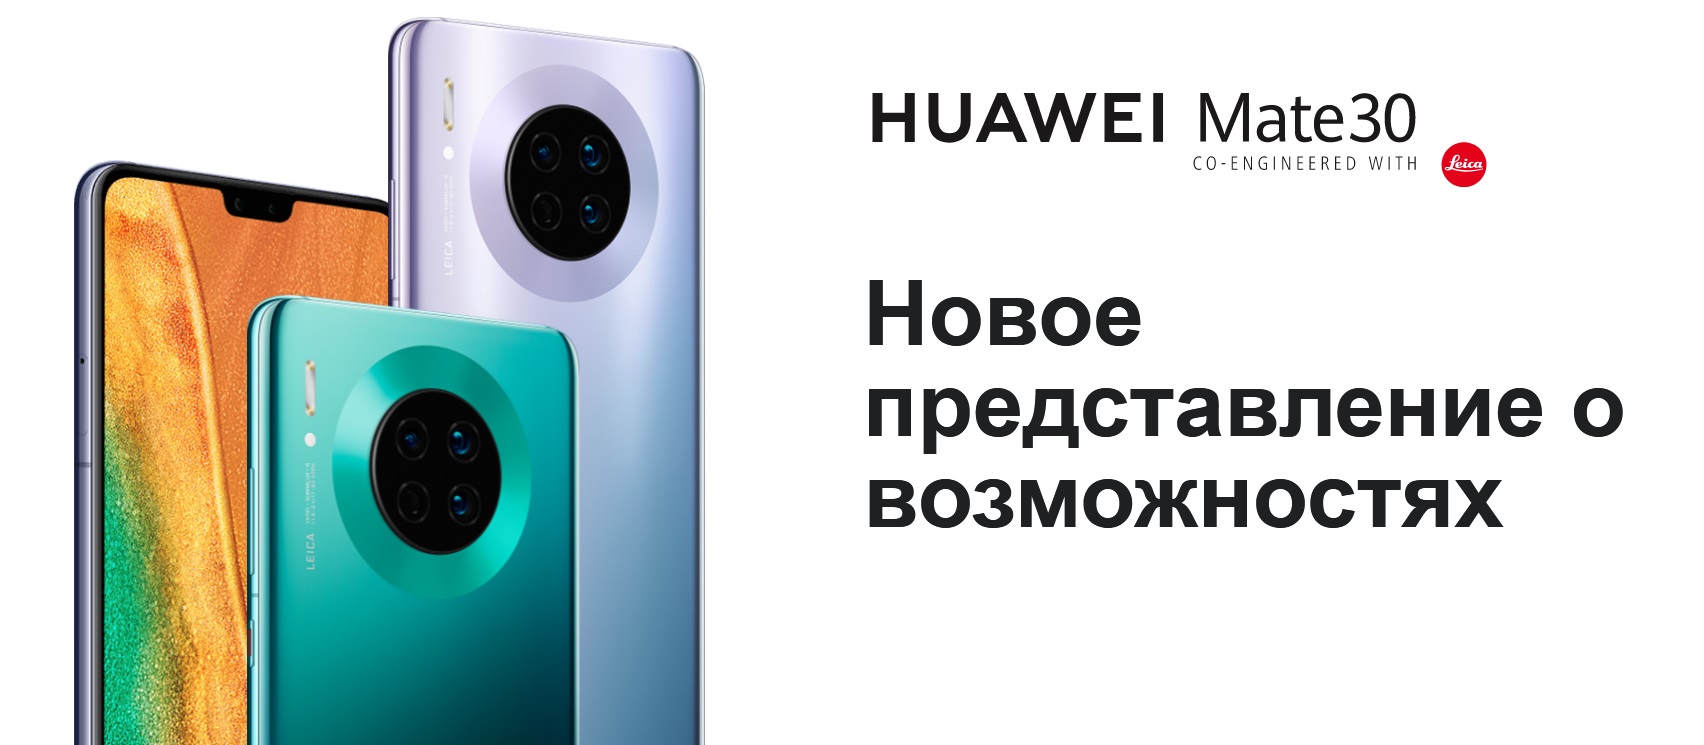 Huawei Mate 30 Buy 1